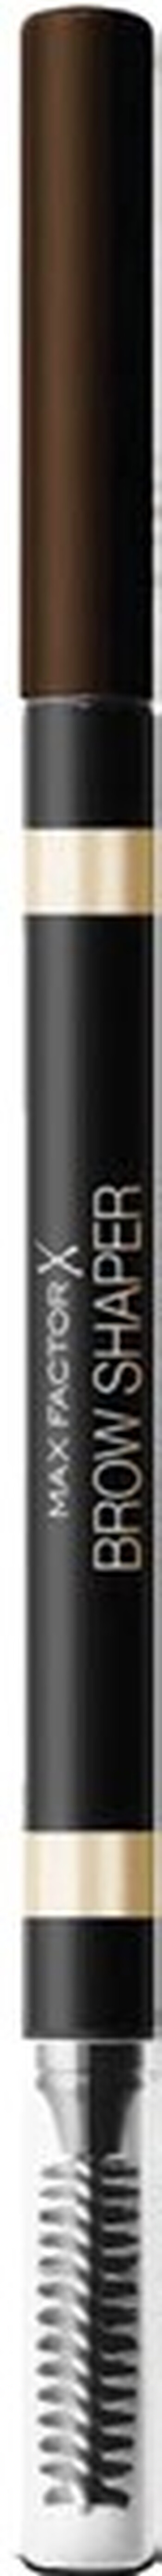 Max Factor Brow Shaper Eyebrow Pencil